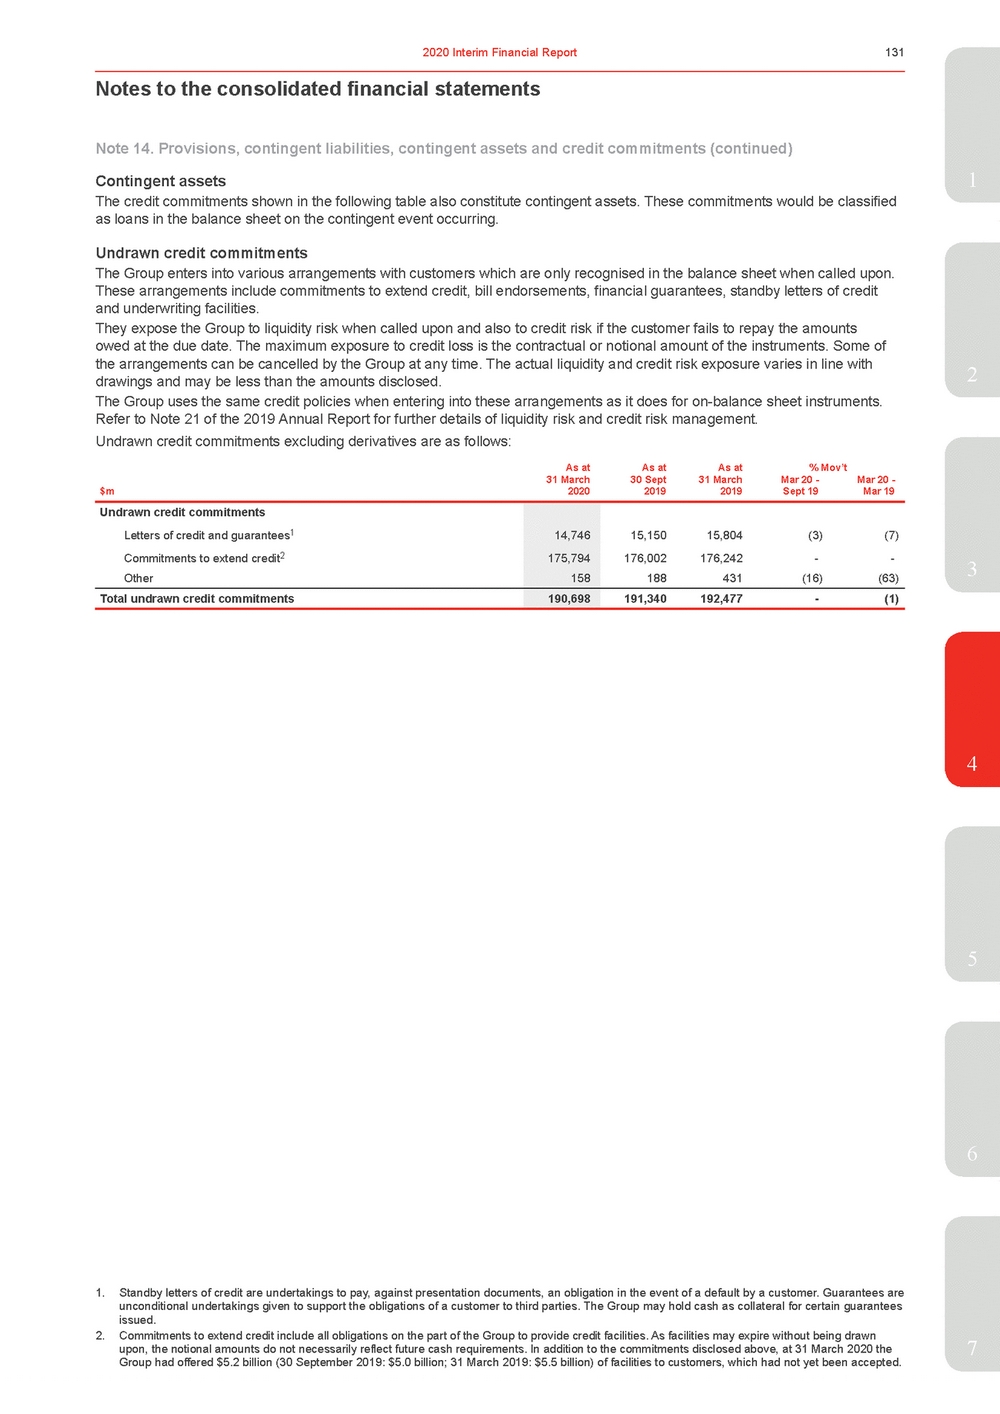 11676-3-ex1_westpac 2020 interim financial results announcement_page_136.jpg